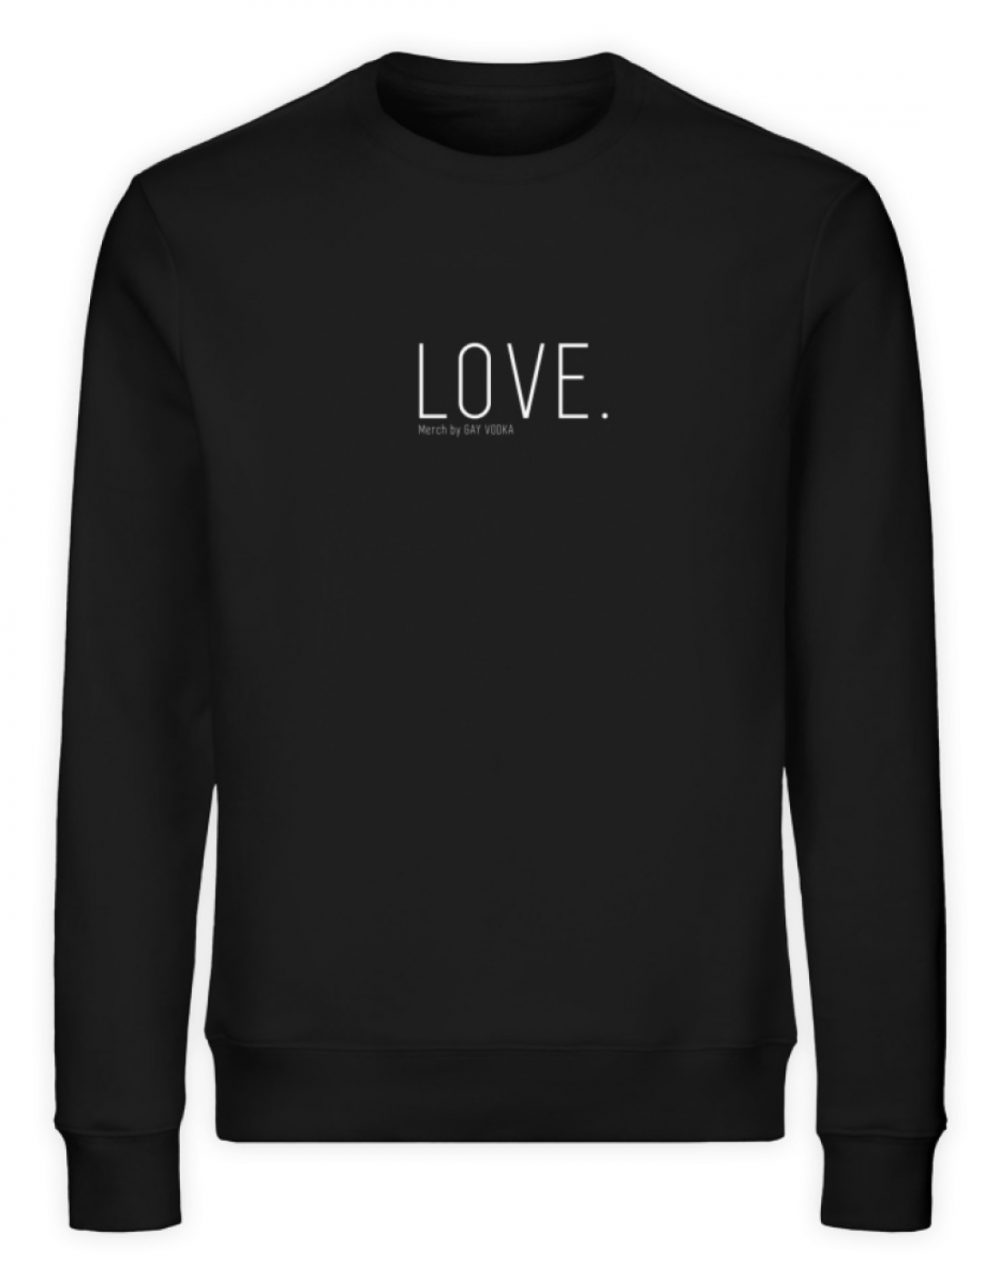 LOVE. - Unisex Organic Sweatshirt-16